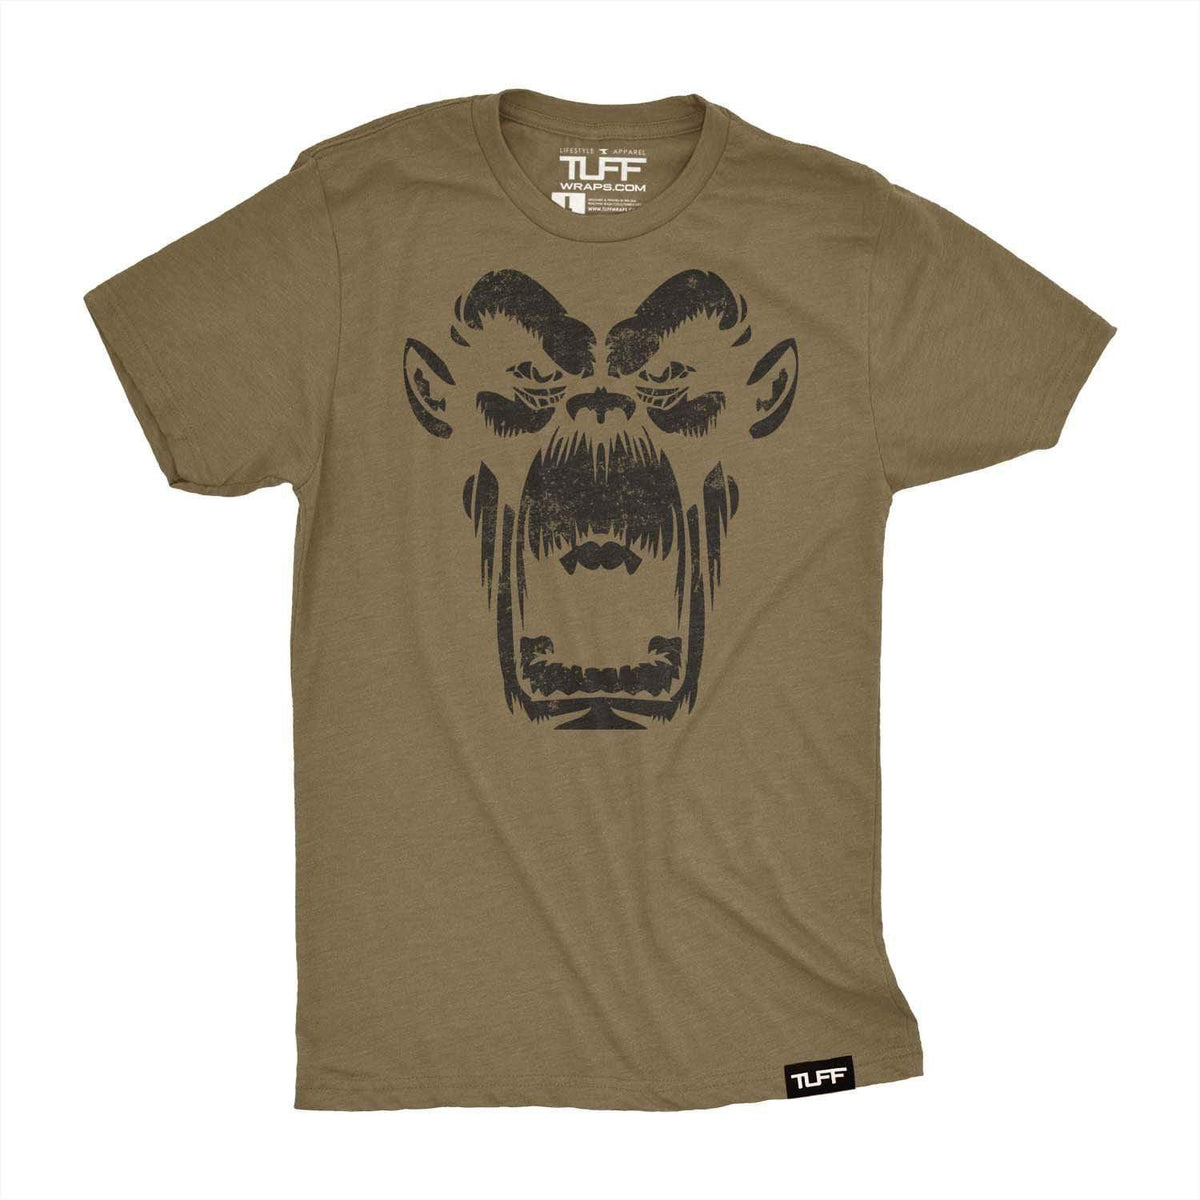 Gorilla TUFF Tee T-shirt